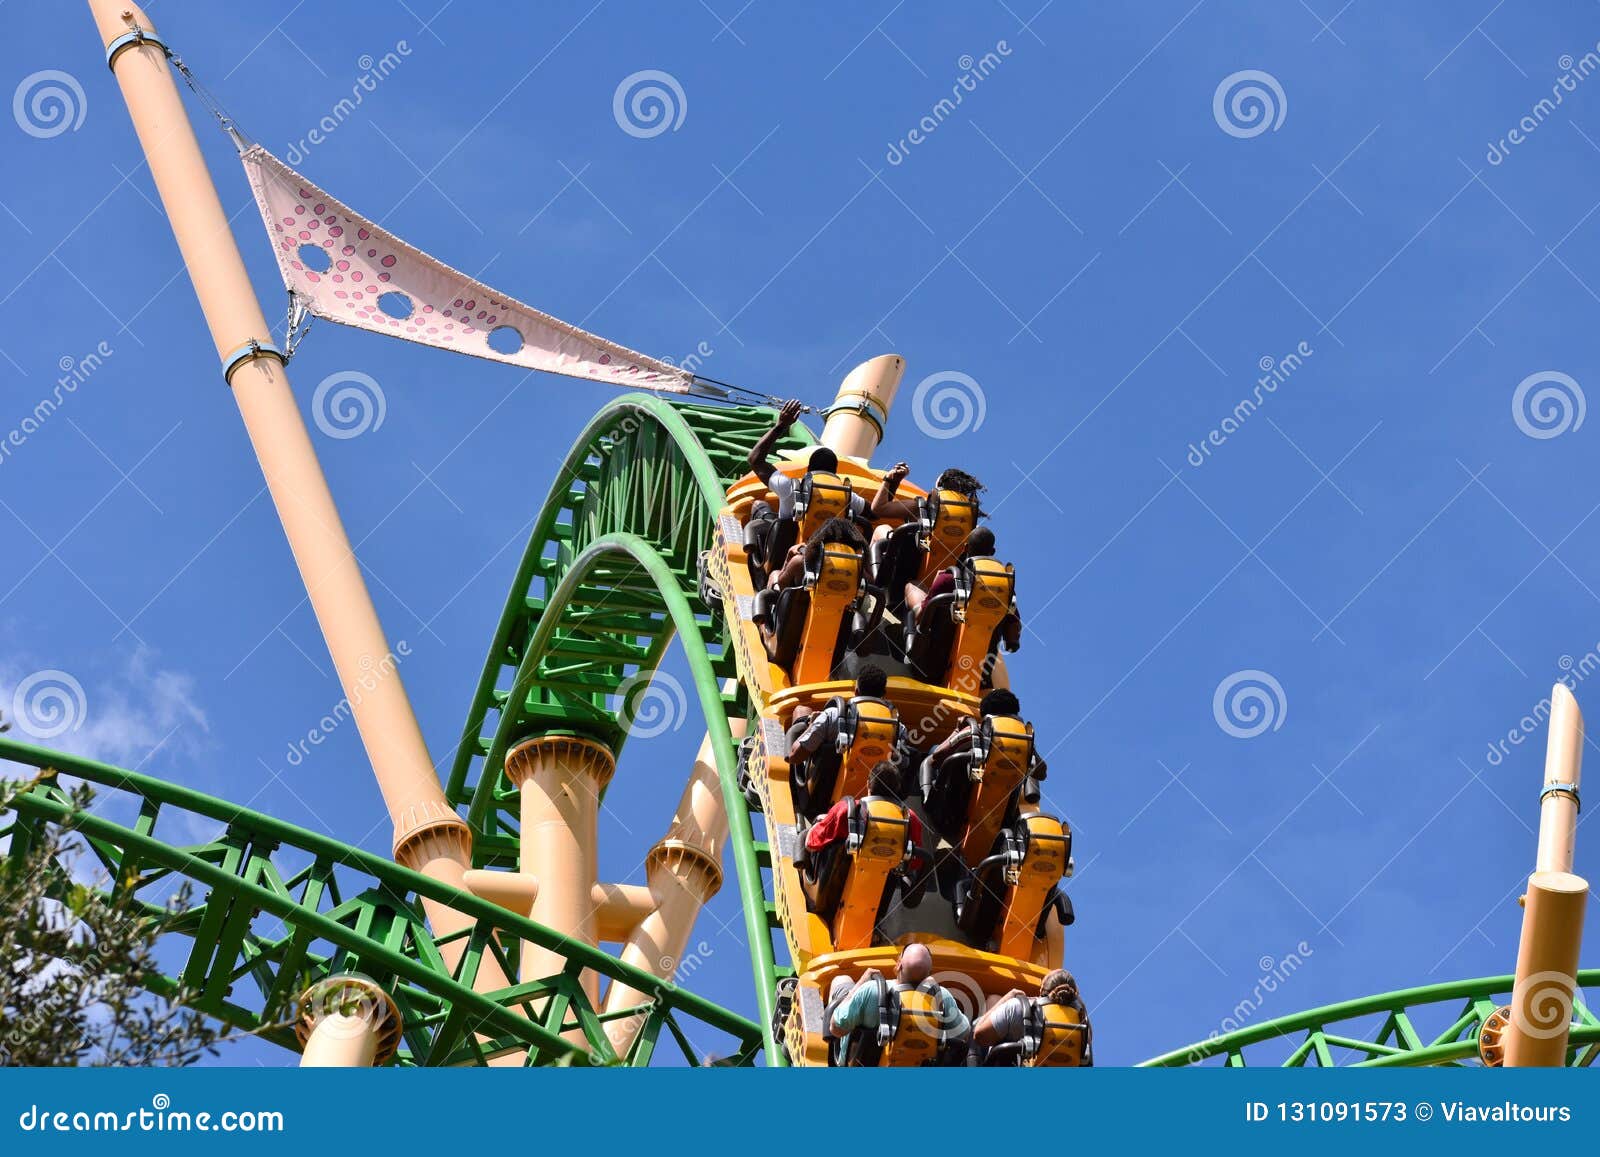 Terrific Cheetah Hunt Rollercoaster At Bush Gardens Theme Park